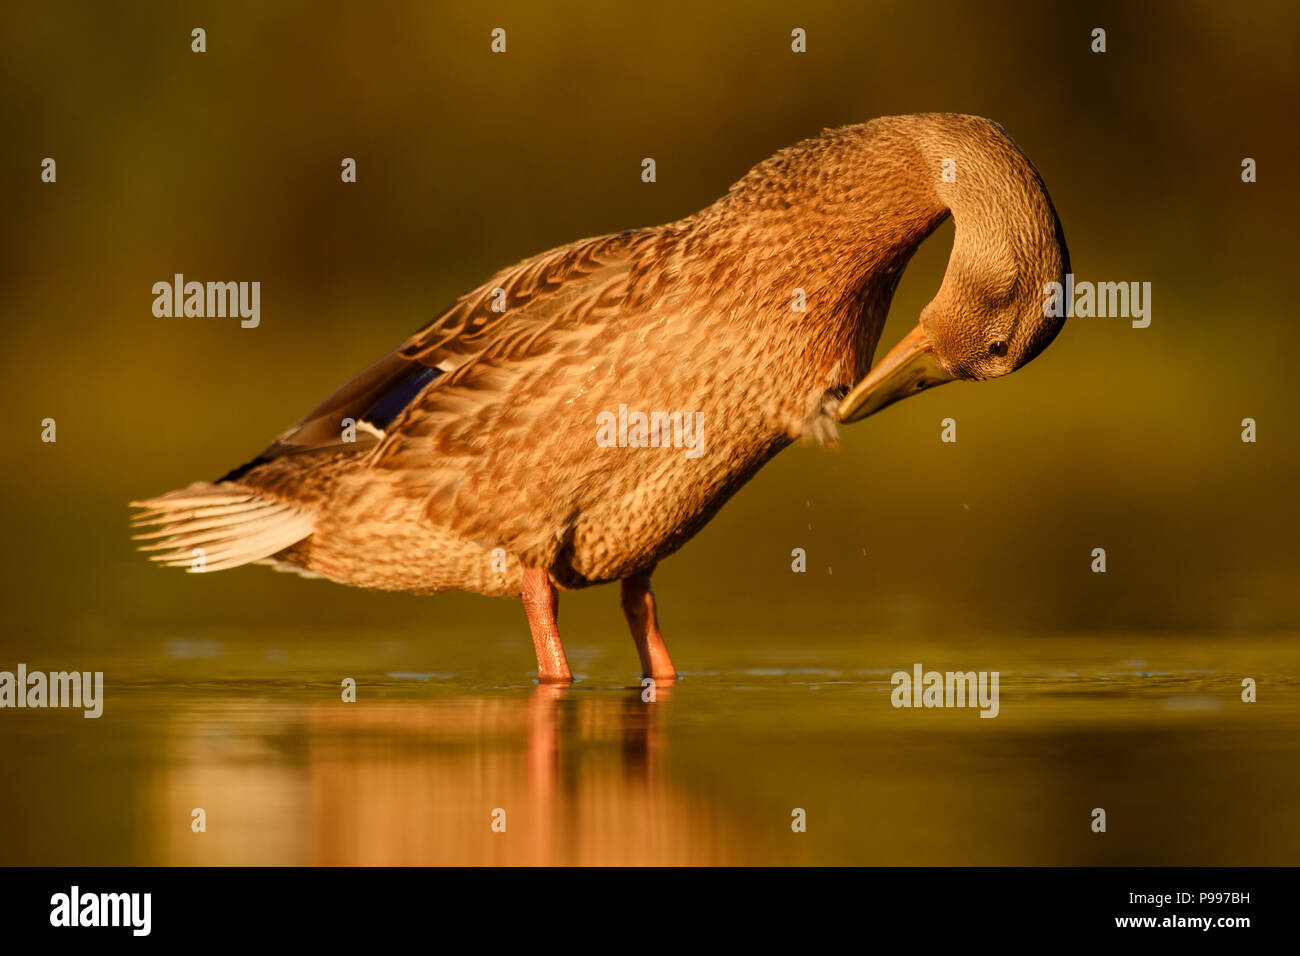 Mallard duck - Anas platyrhynchos, common water bird from European rivers and lakes. Stock Photo